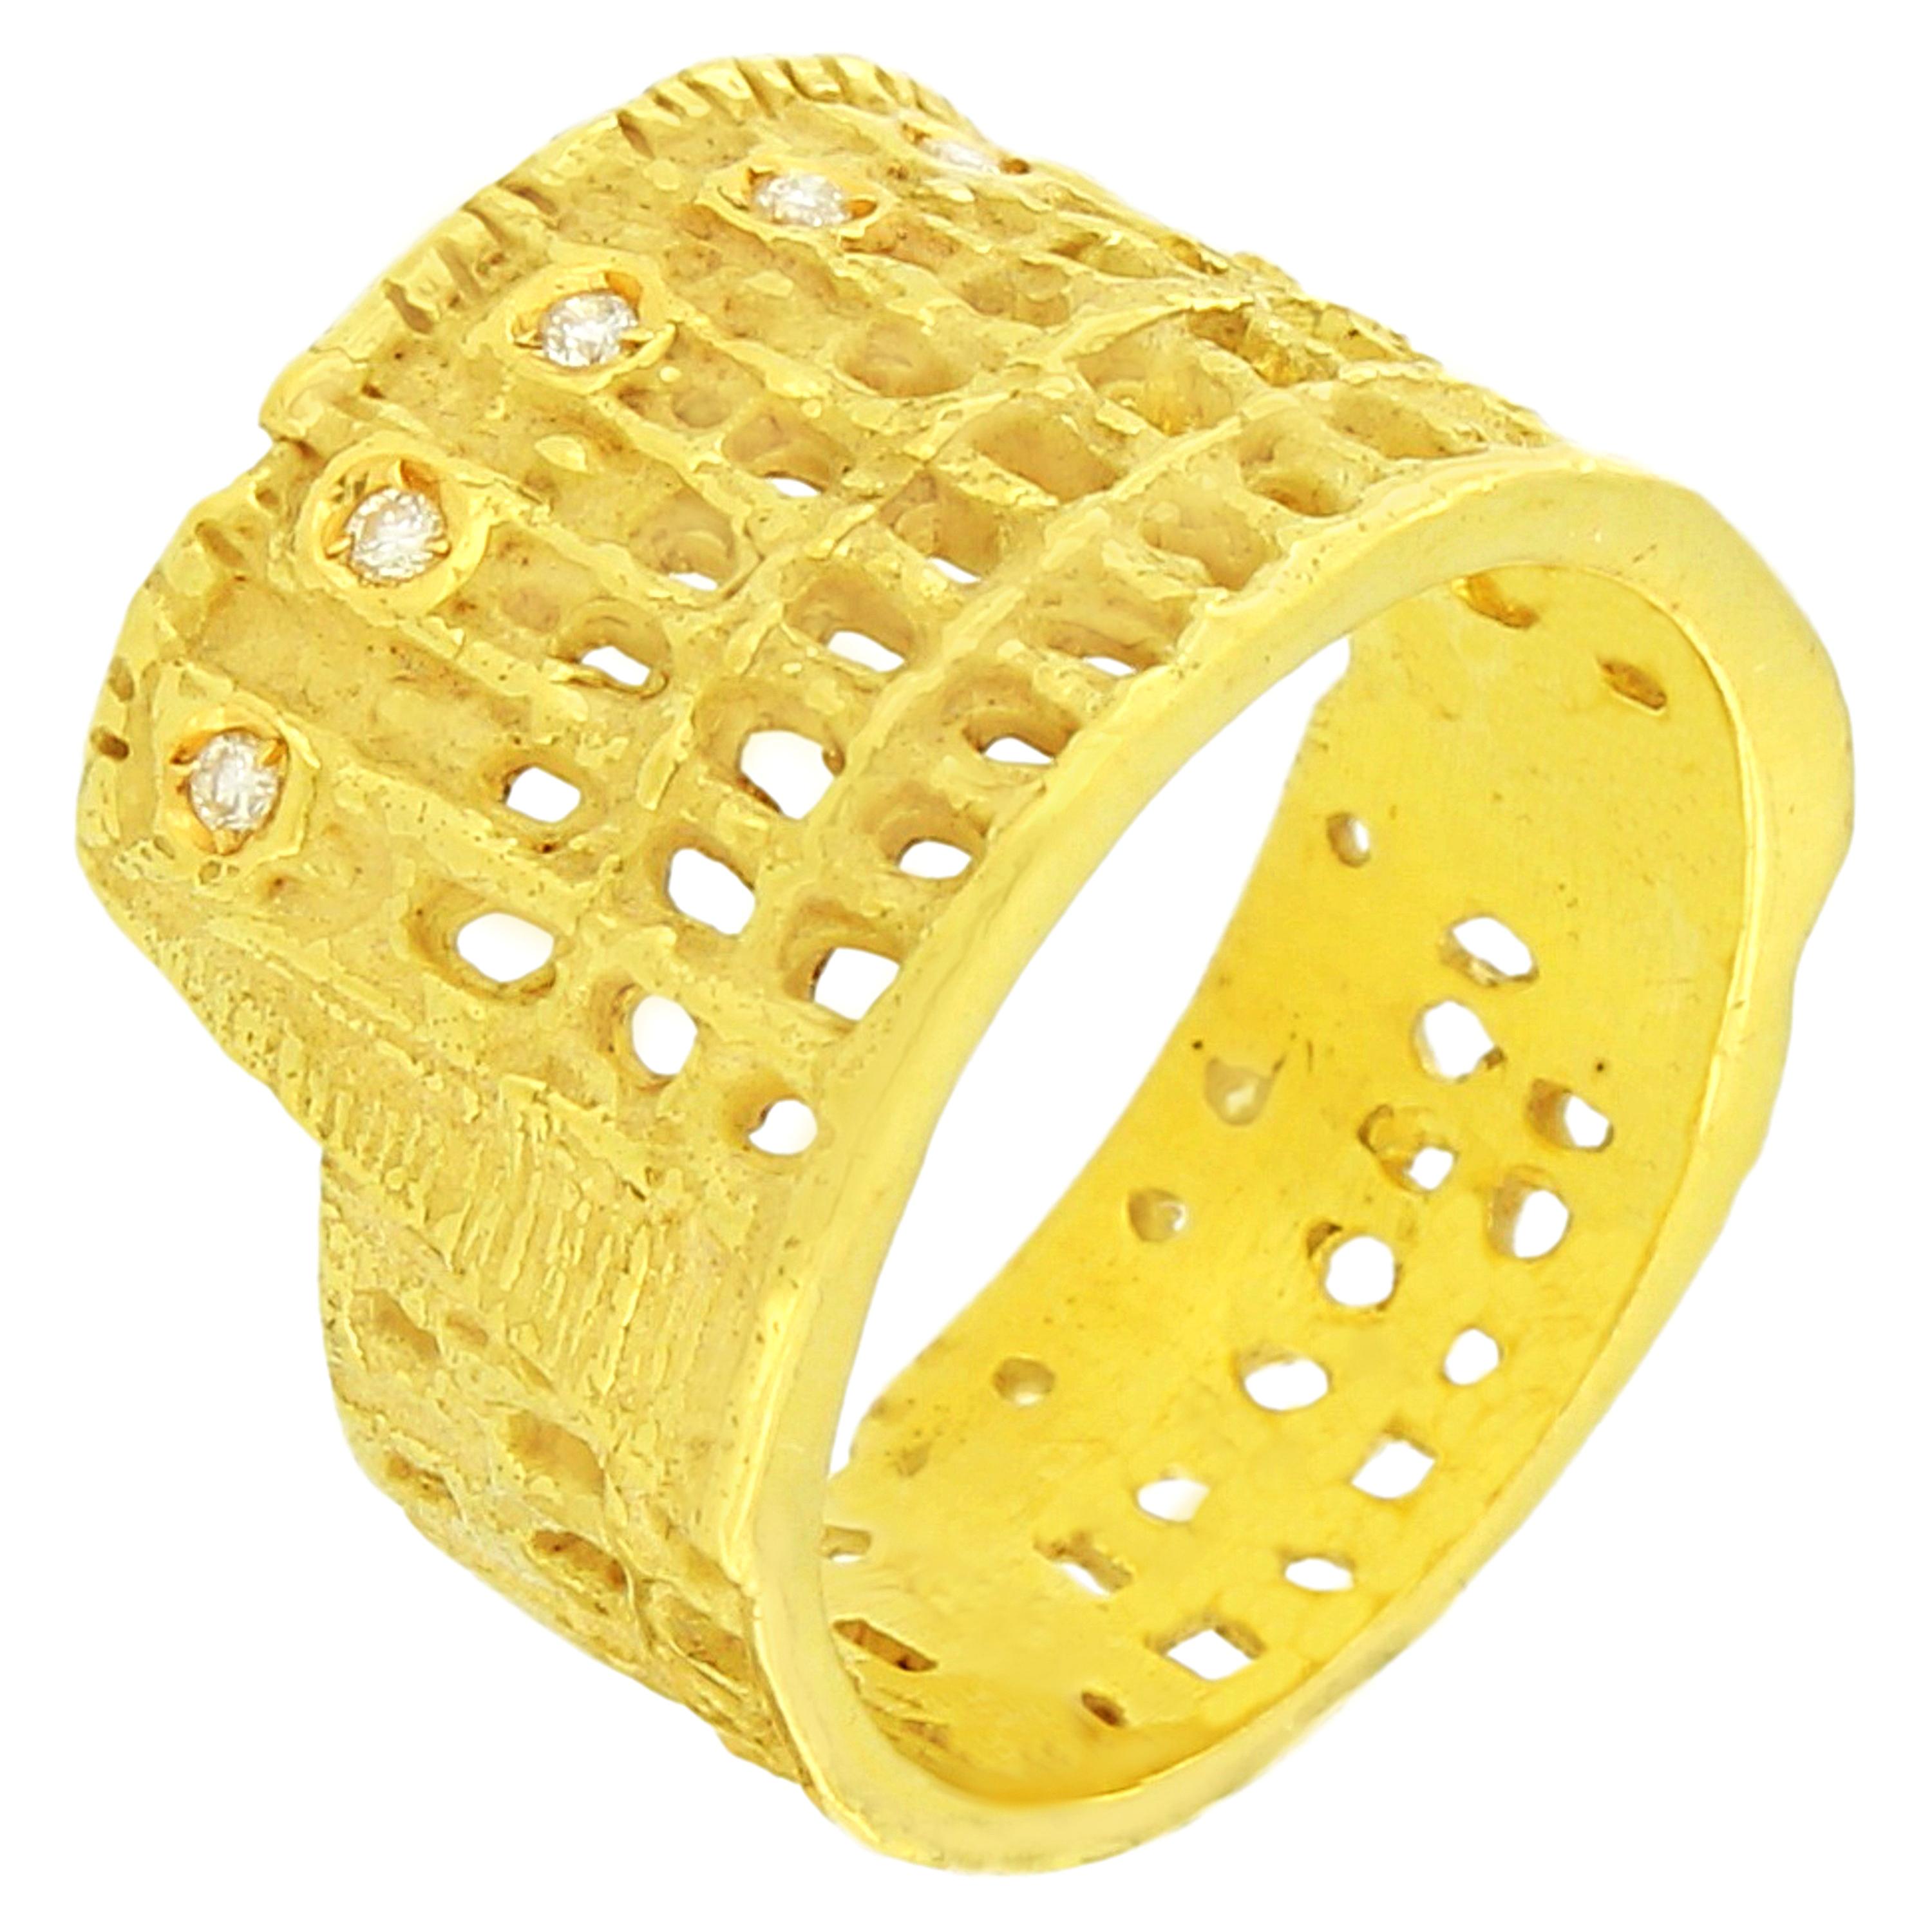 Sacchi Roman Colosseum Ring 18 Karat Yellow Gold and Diamonds Gemstone For Sale